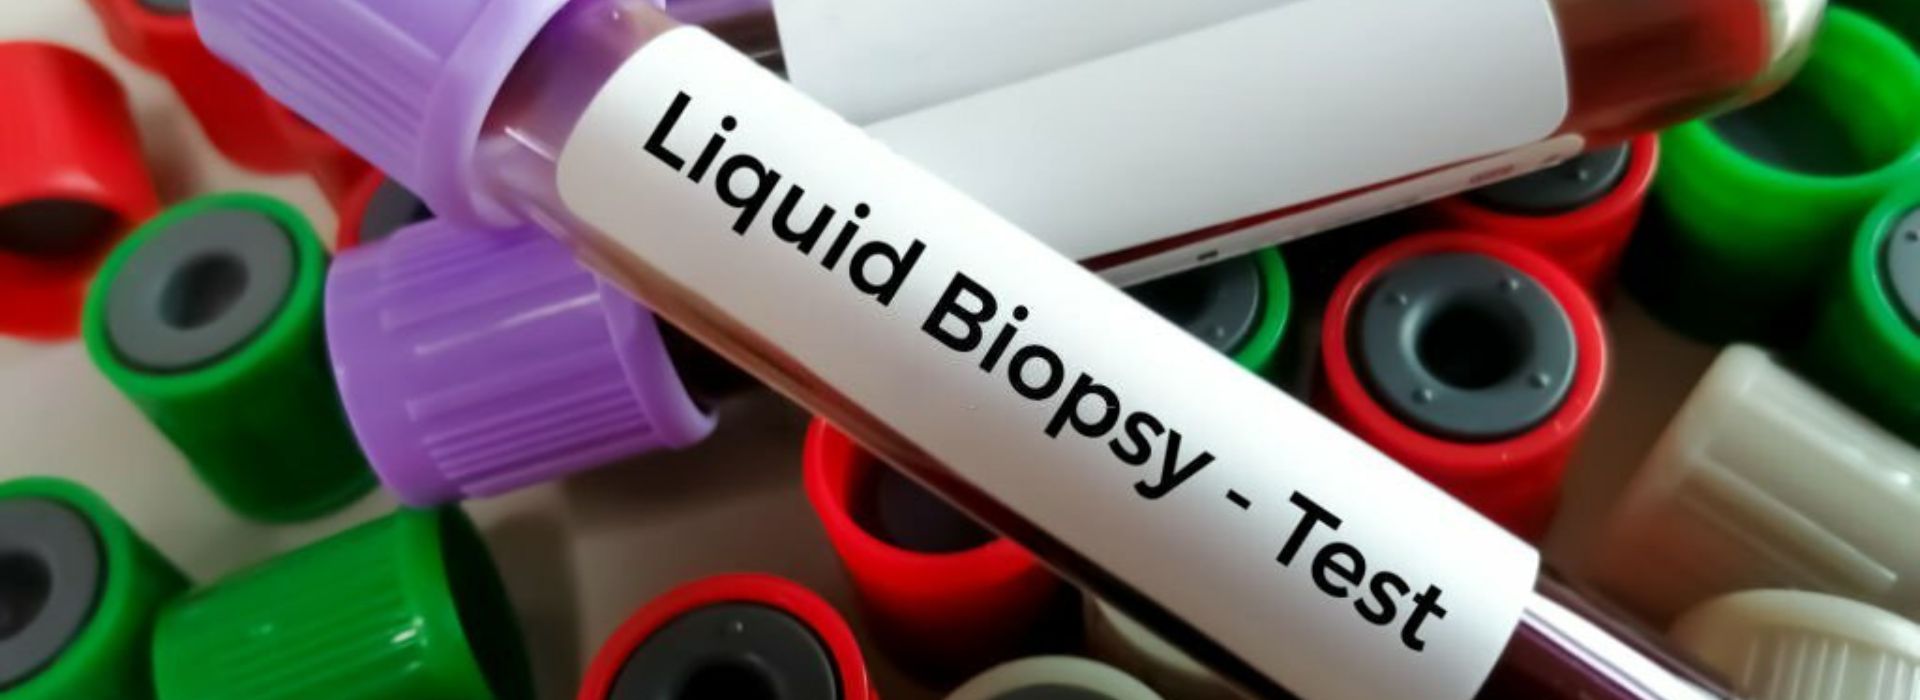 Liquid biopsy An Advanced technique To Detect Cancer 